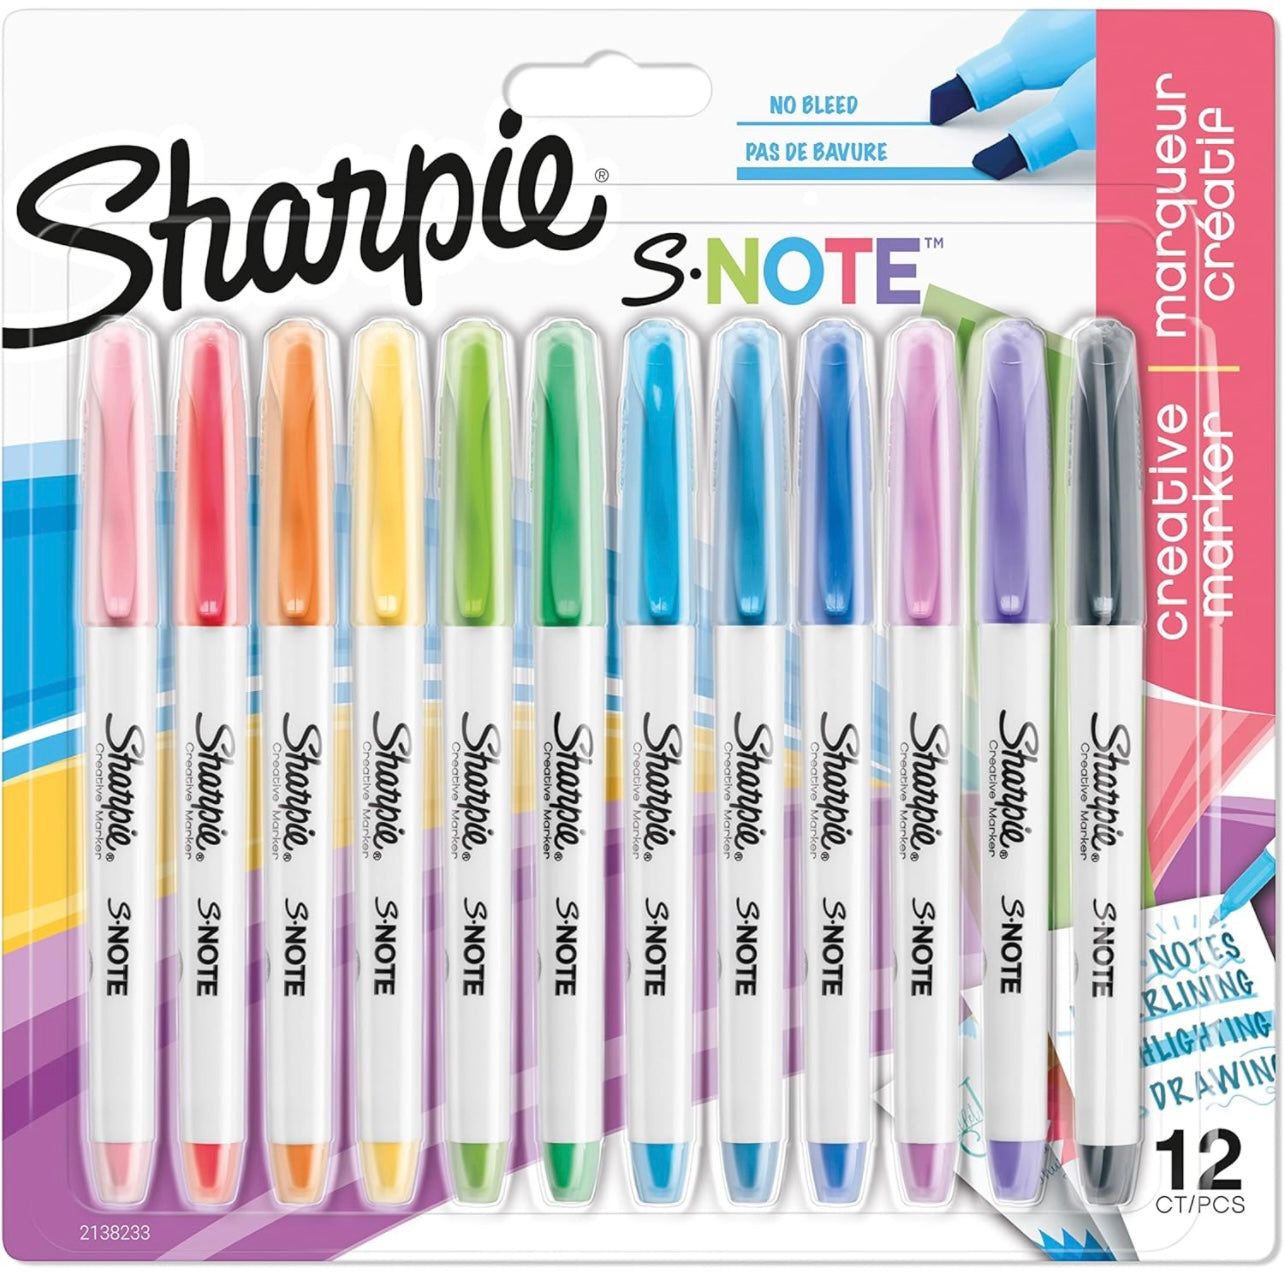 Sharpie S-Note Creative Colouring Highlighter Pens 12 Colors || مجموعة الوان شاربي ١٢ لون اس نوت 